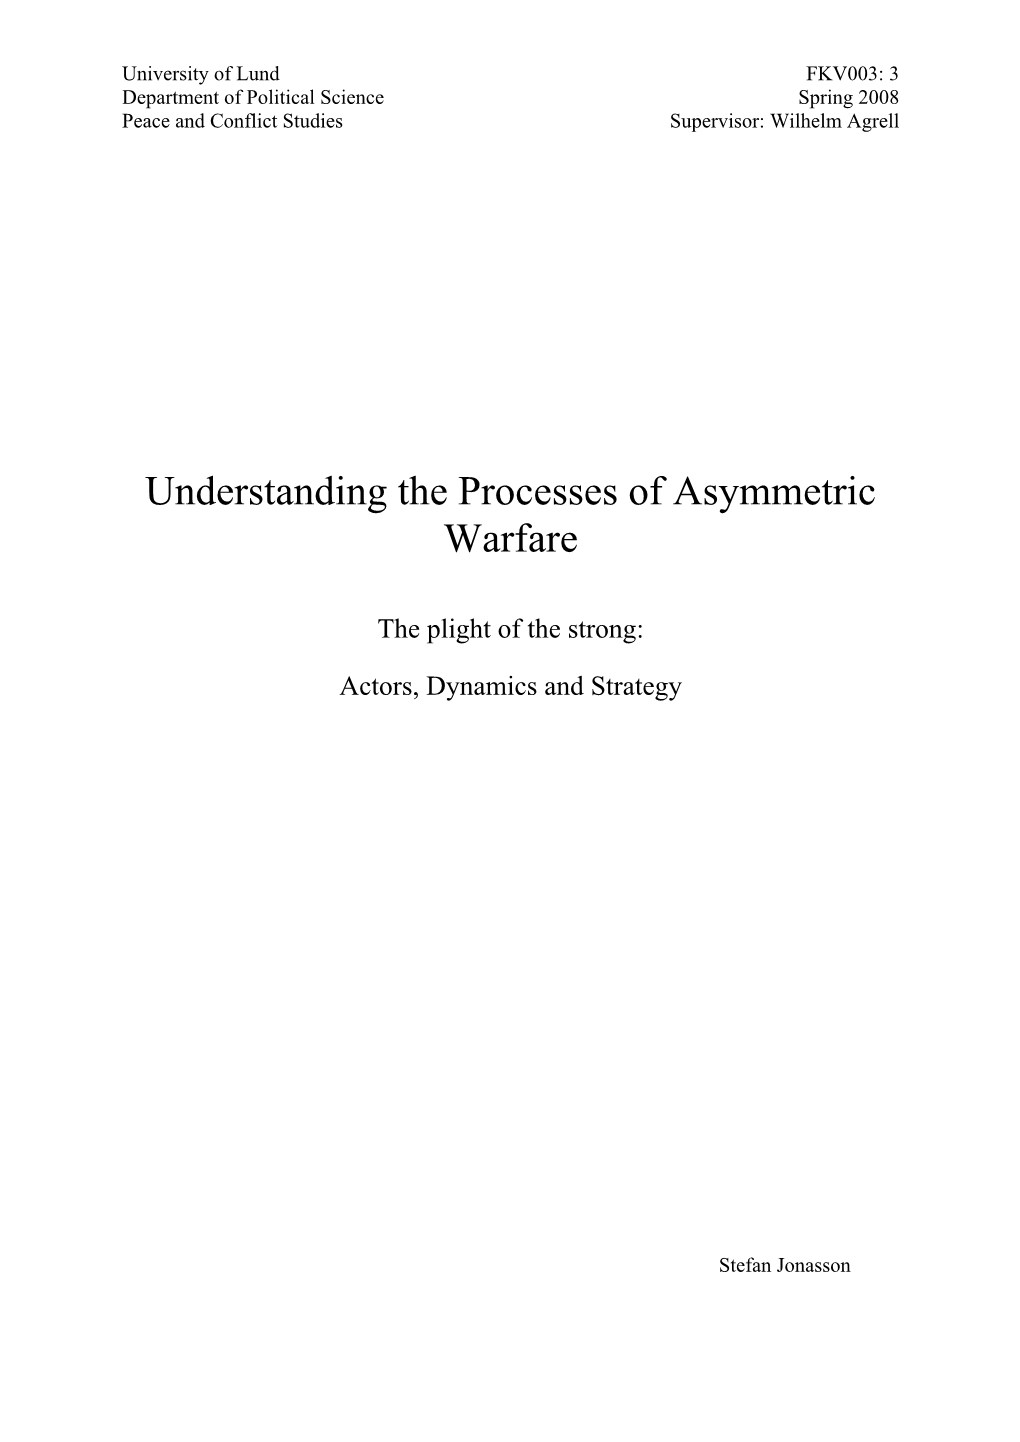 Understanding the Processes of Asymmetric Warfare